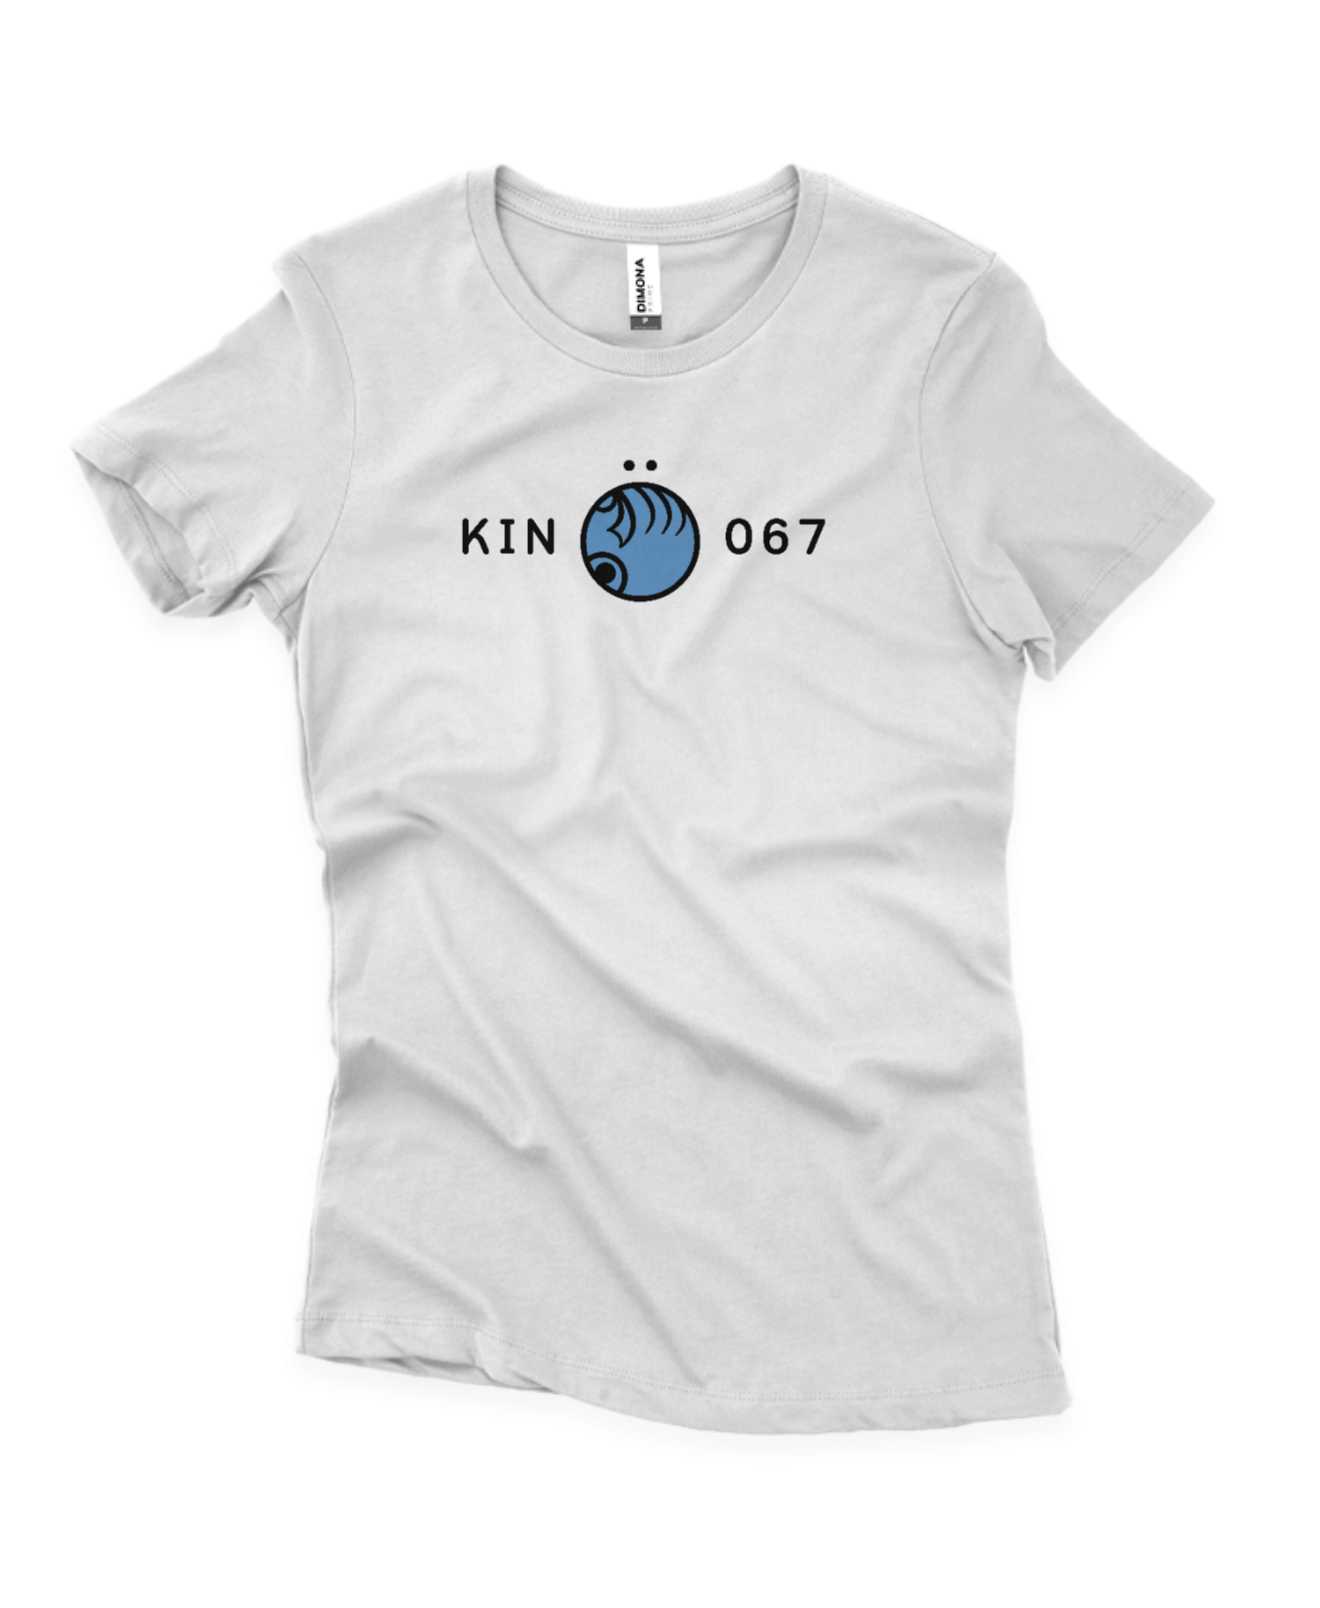 Camisa Feminina Branca Kin 067 - Mão Lunar Azul - Kin 67